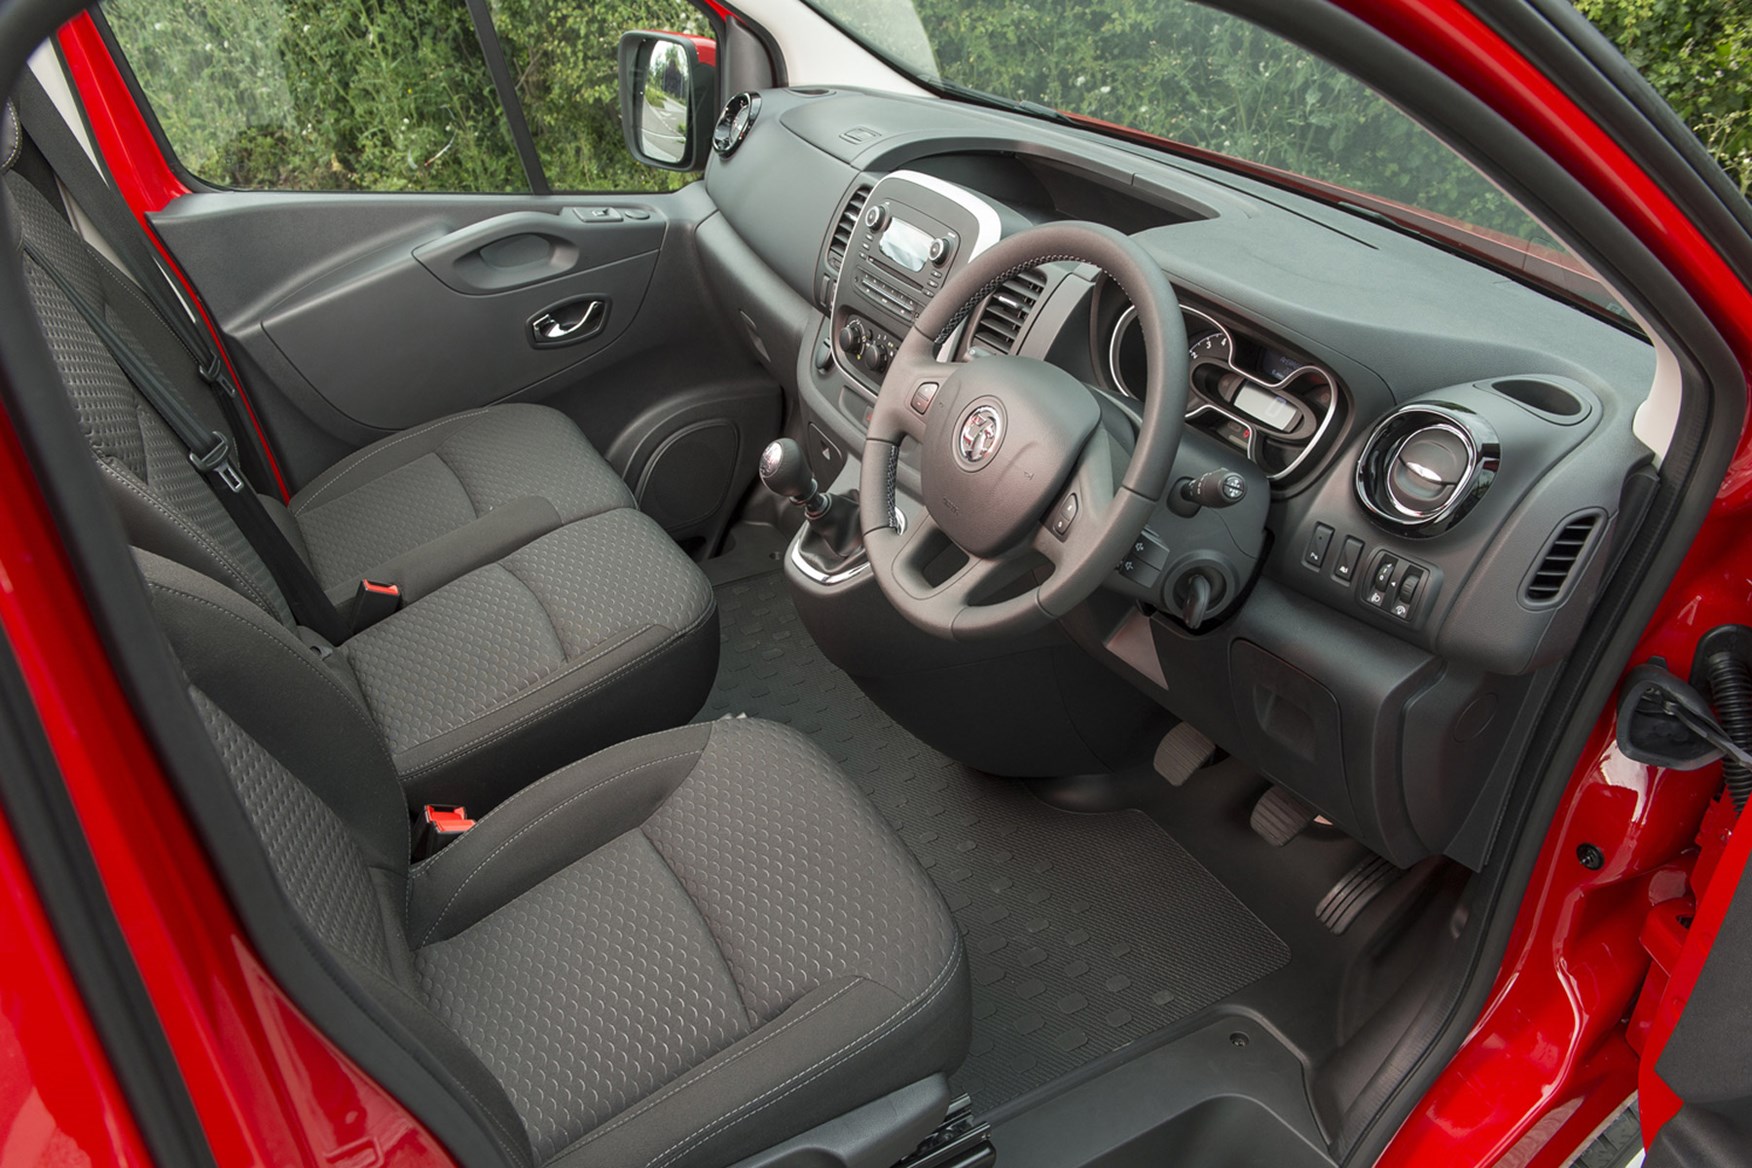 Vauxhall Vivaro review - cab interior